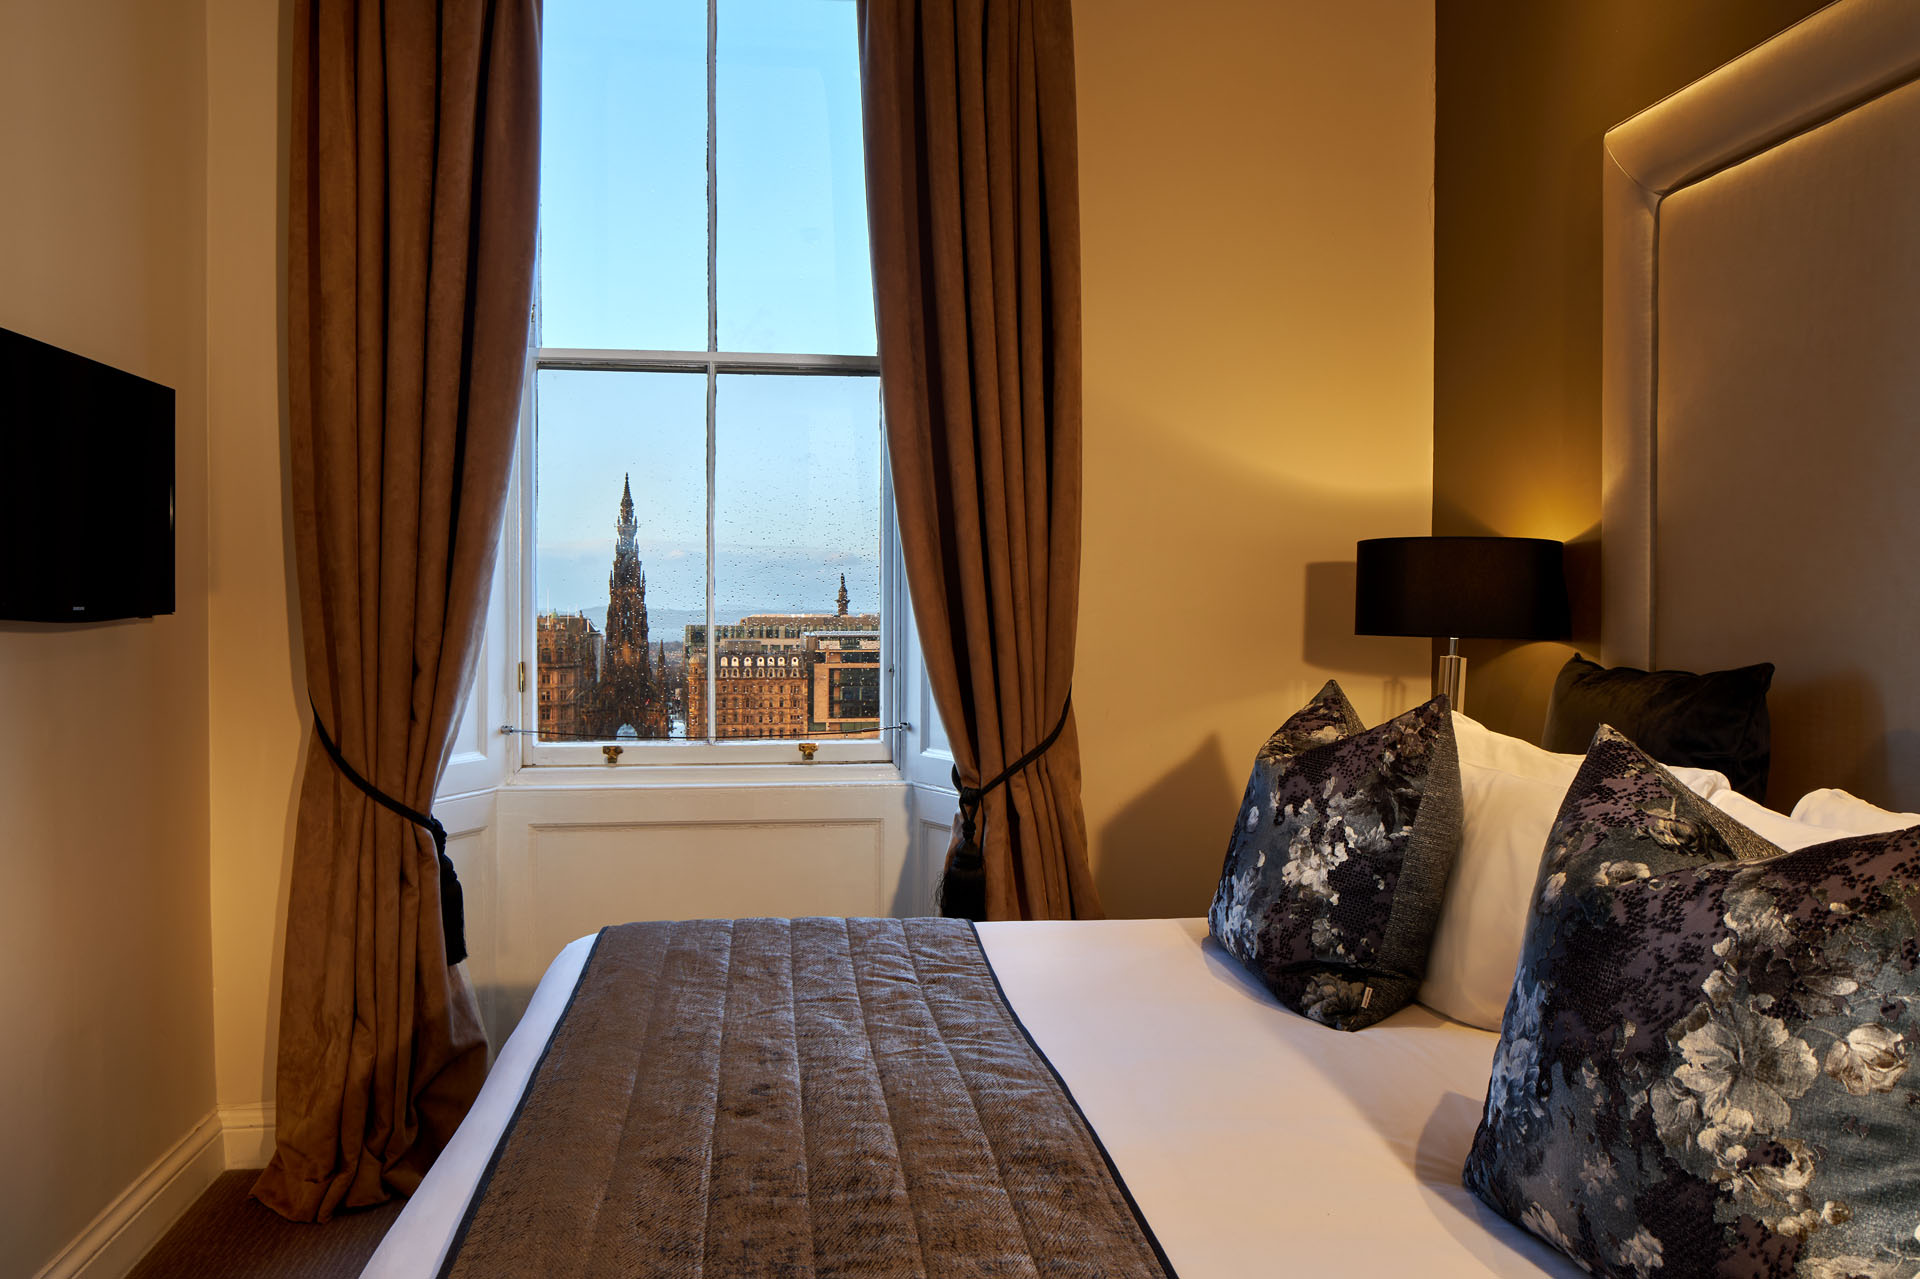 Fraser Suites Edinburgh Named Scotland’s Leading Serviced Apartments by World Travel Awards